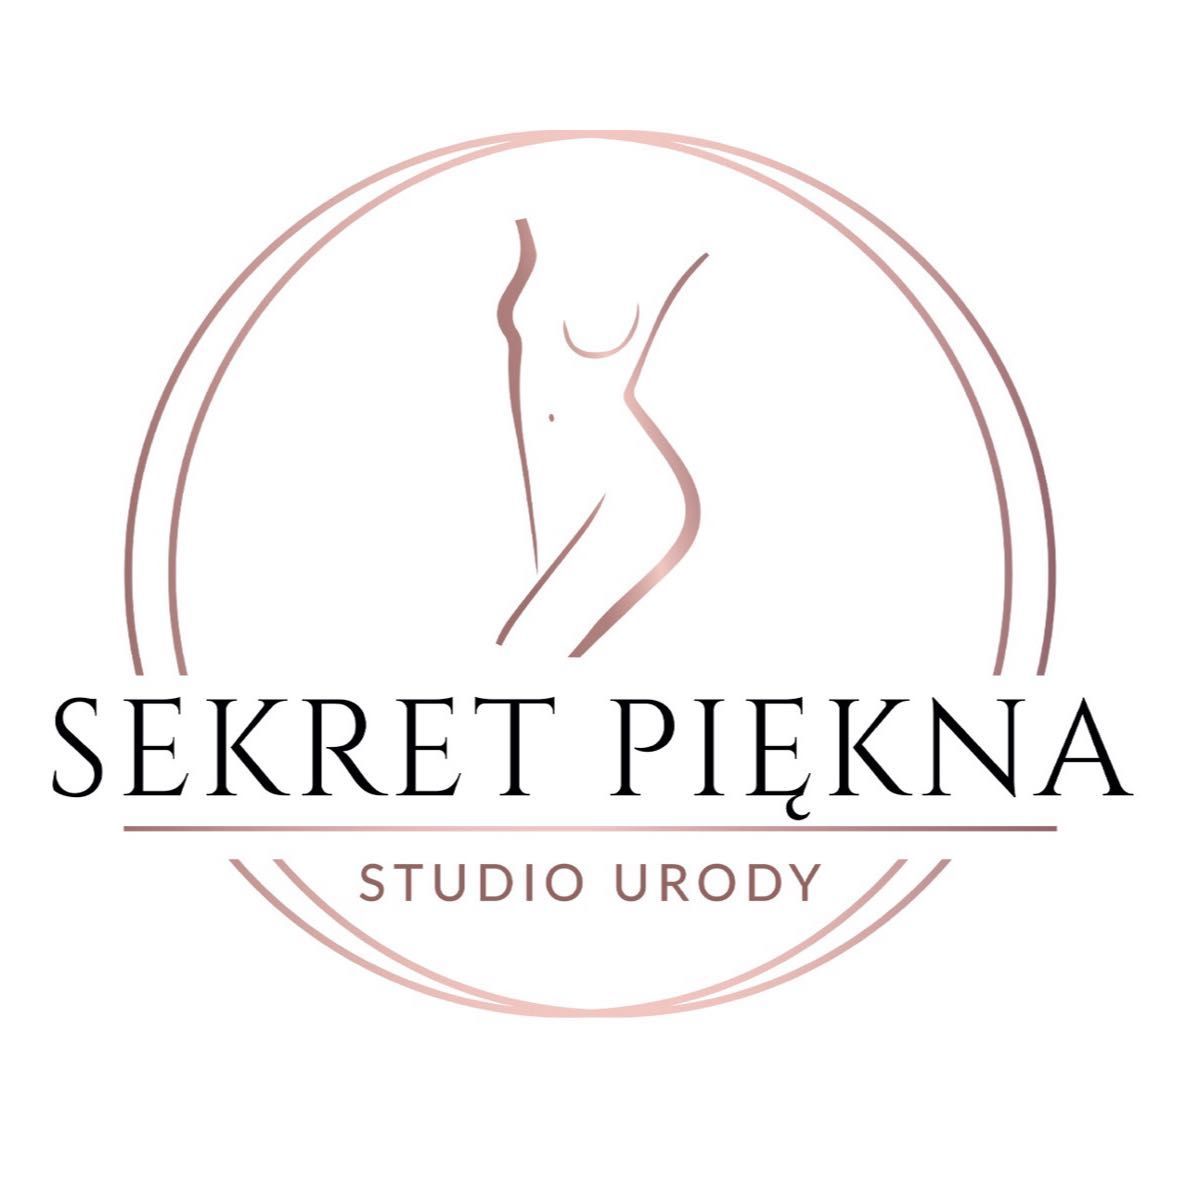 SEKRET PIĘKNA • STUDIO URODY, Parkowa 33, 59-300, Lubin